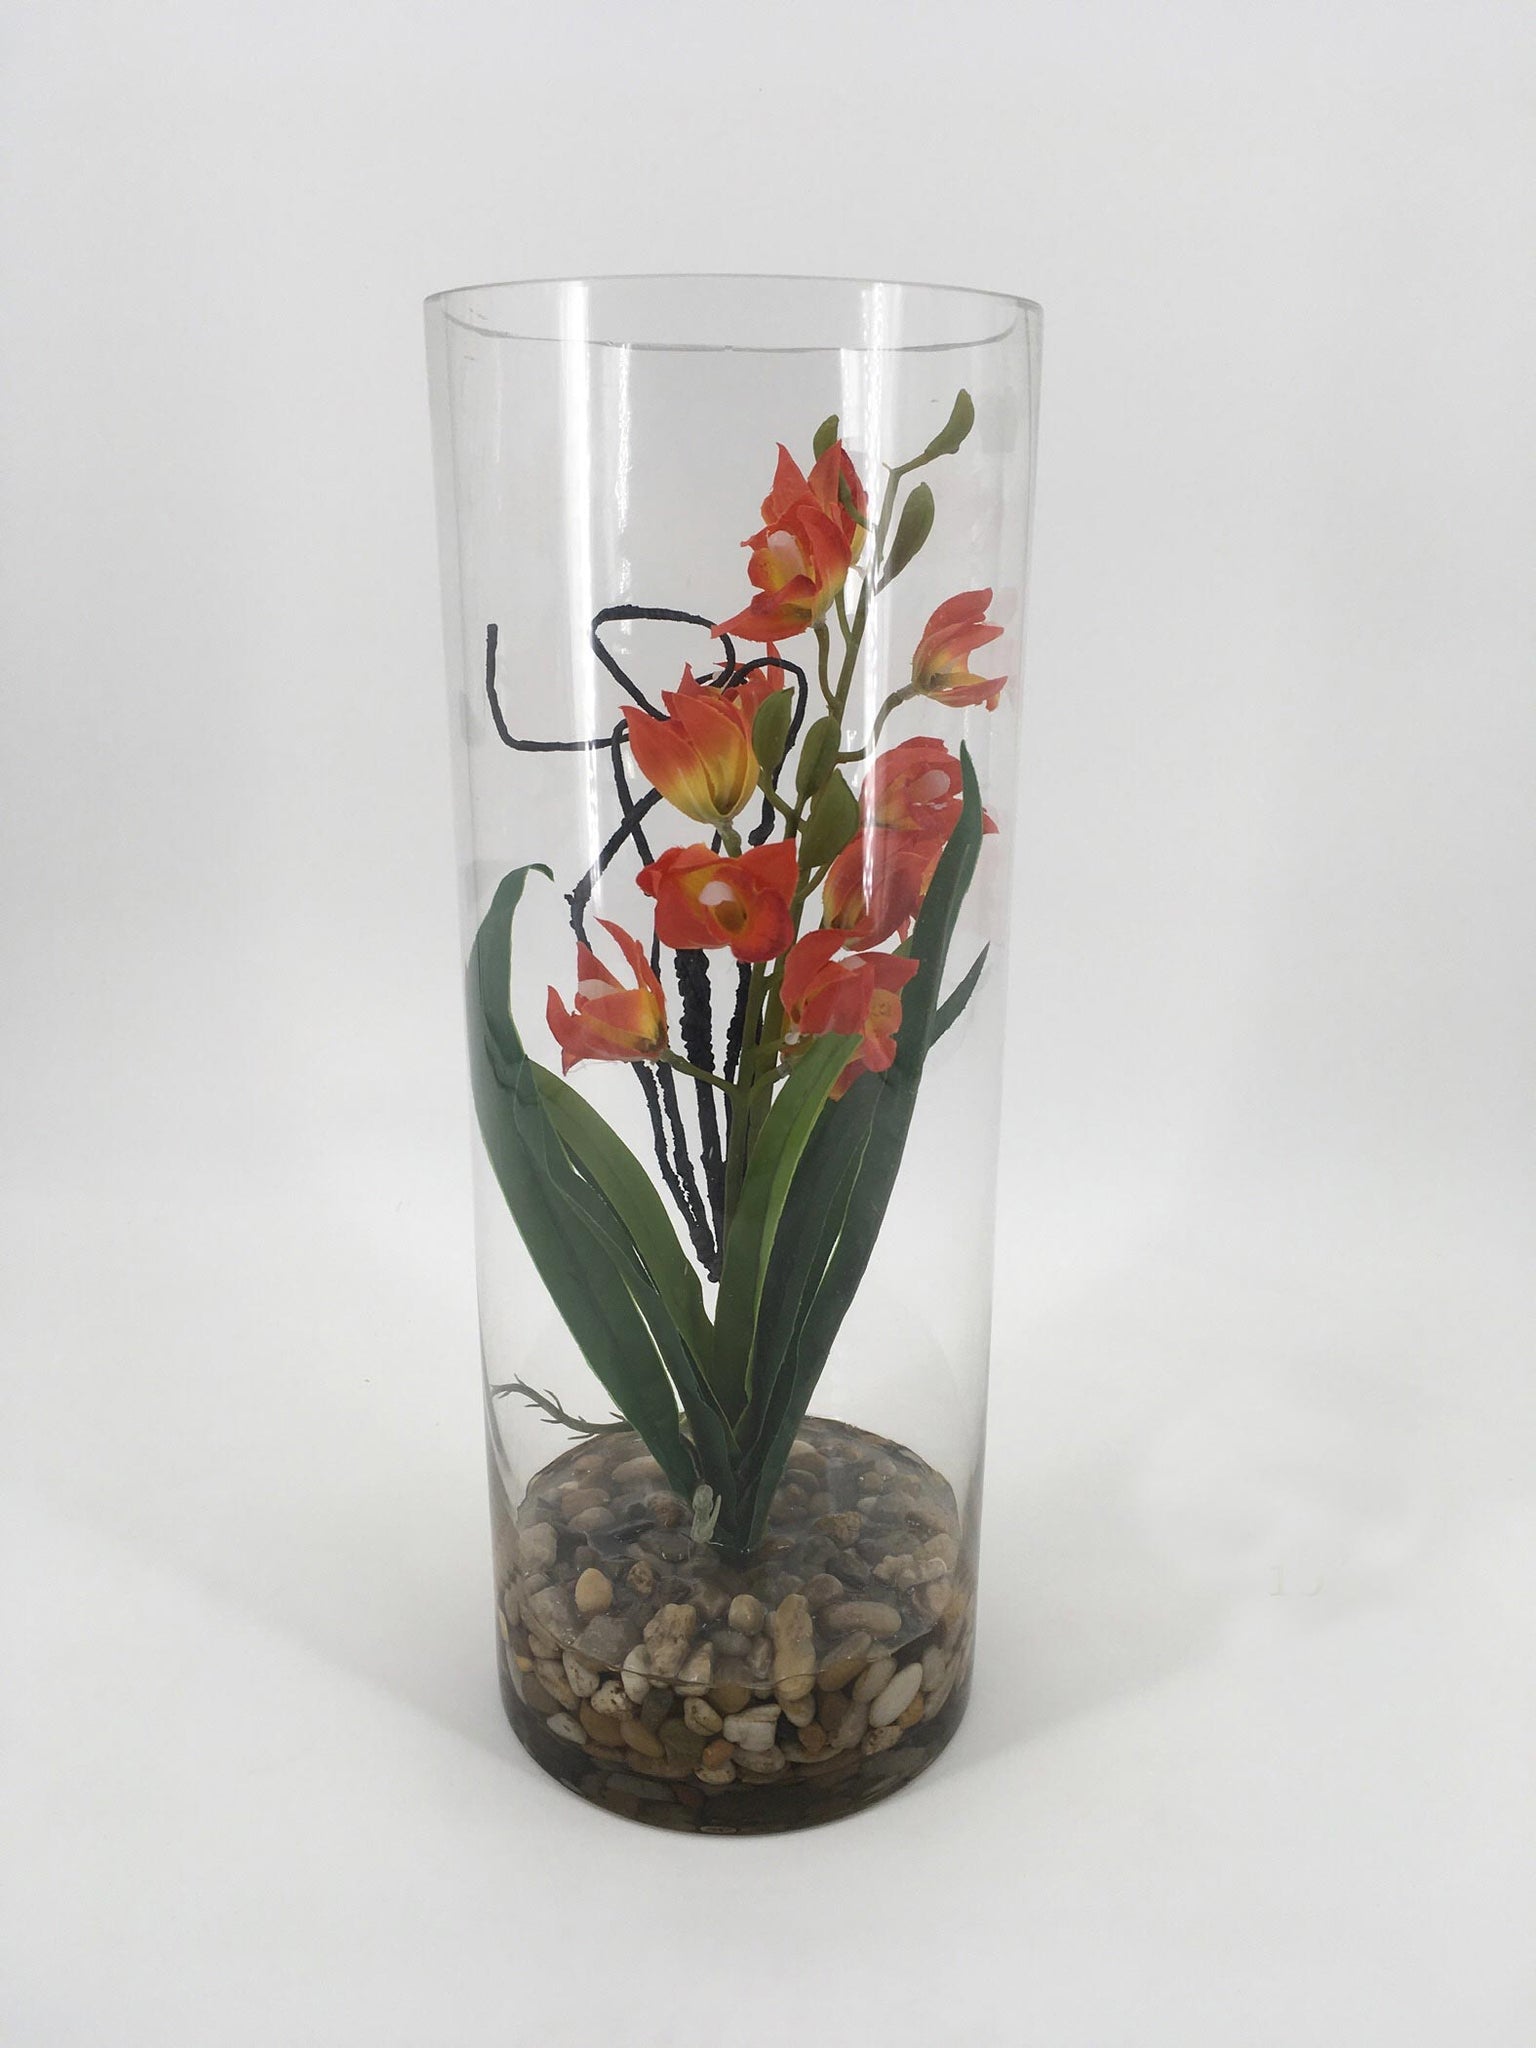 Orange Flower in Glass Vase with Rocks